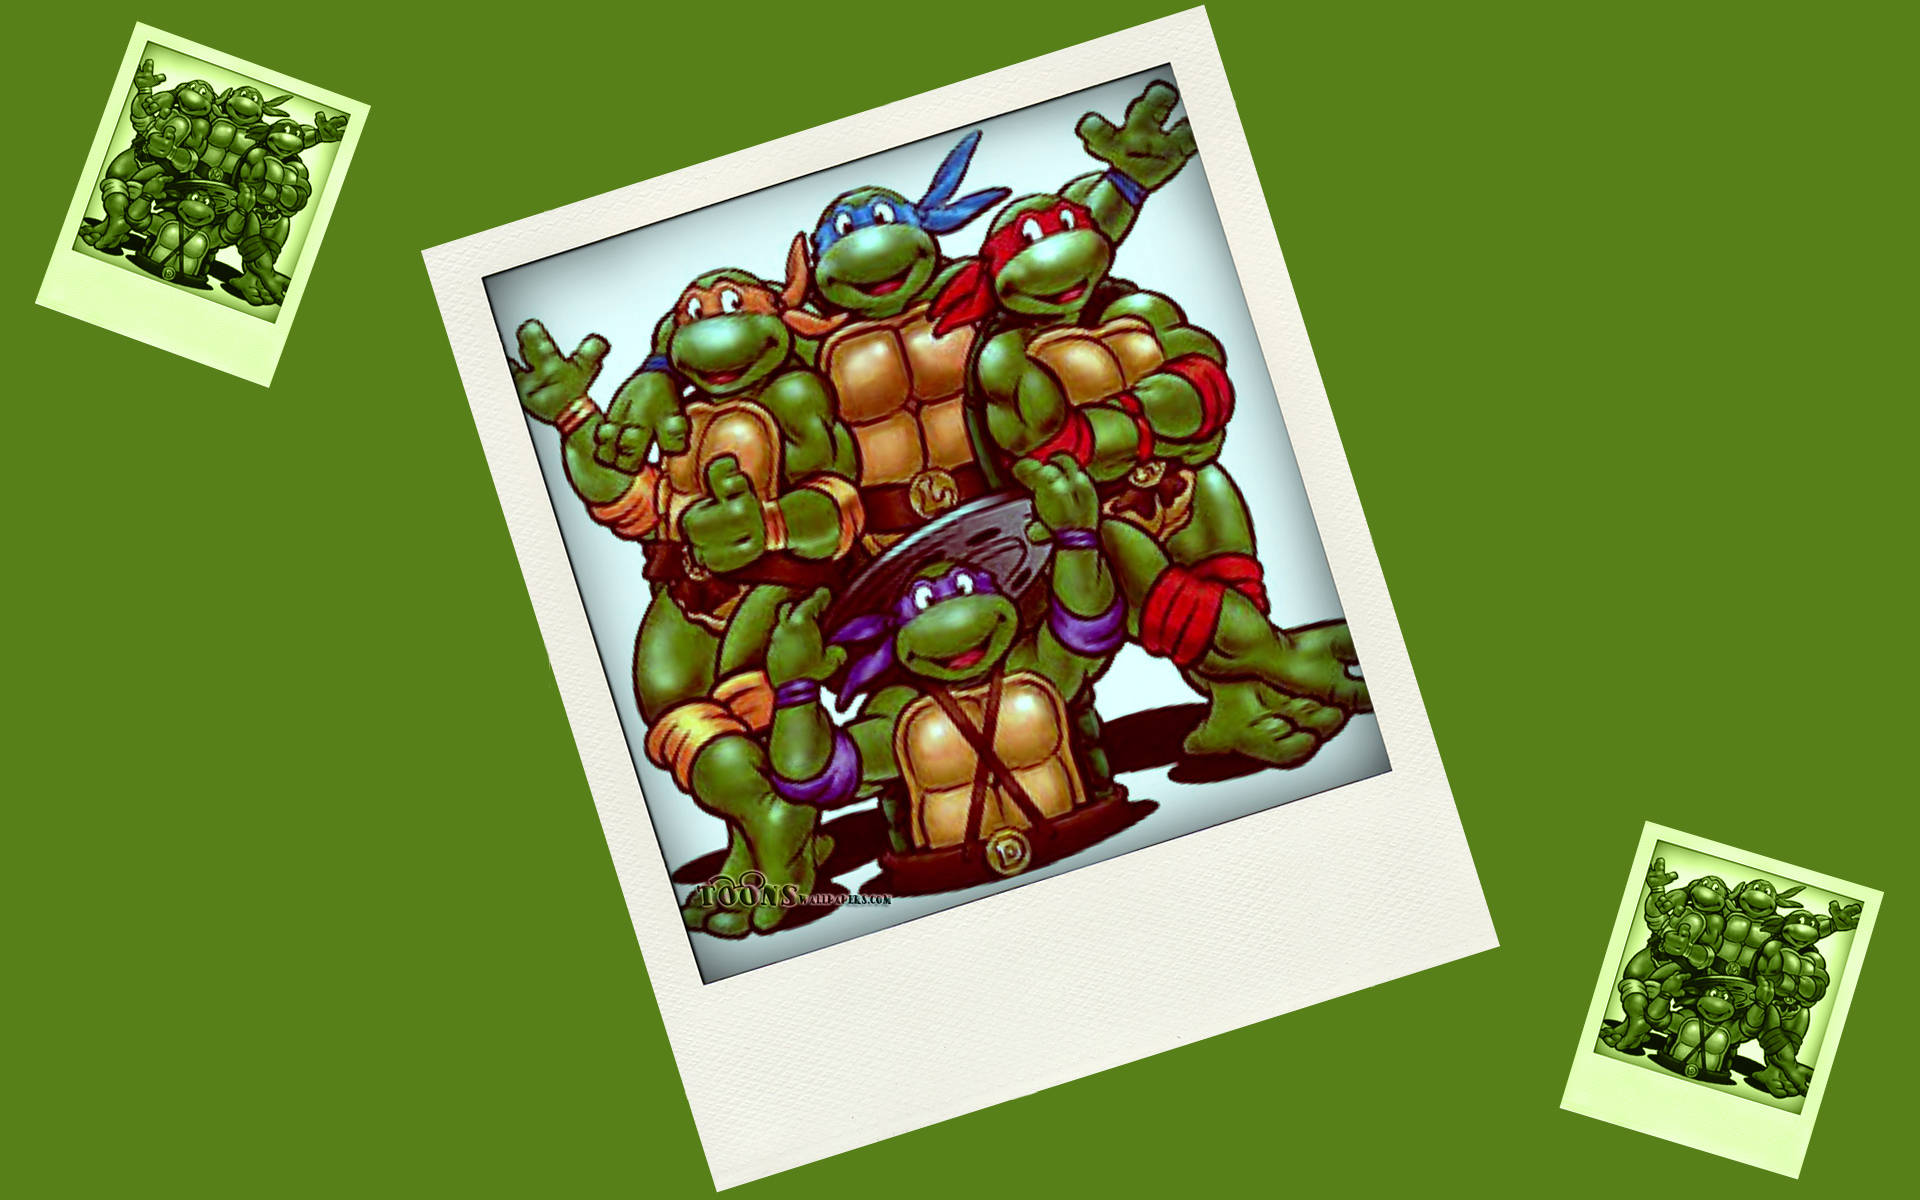 Top 999+ Ninja Turtle Wallpapers Full HD, 4K✅Free to Use